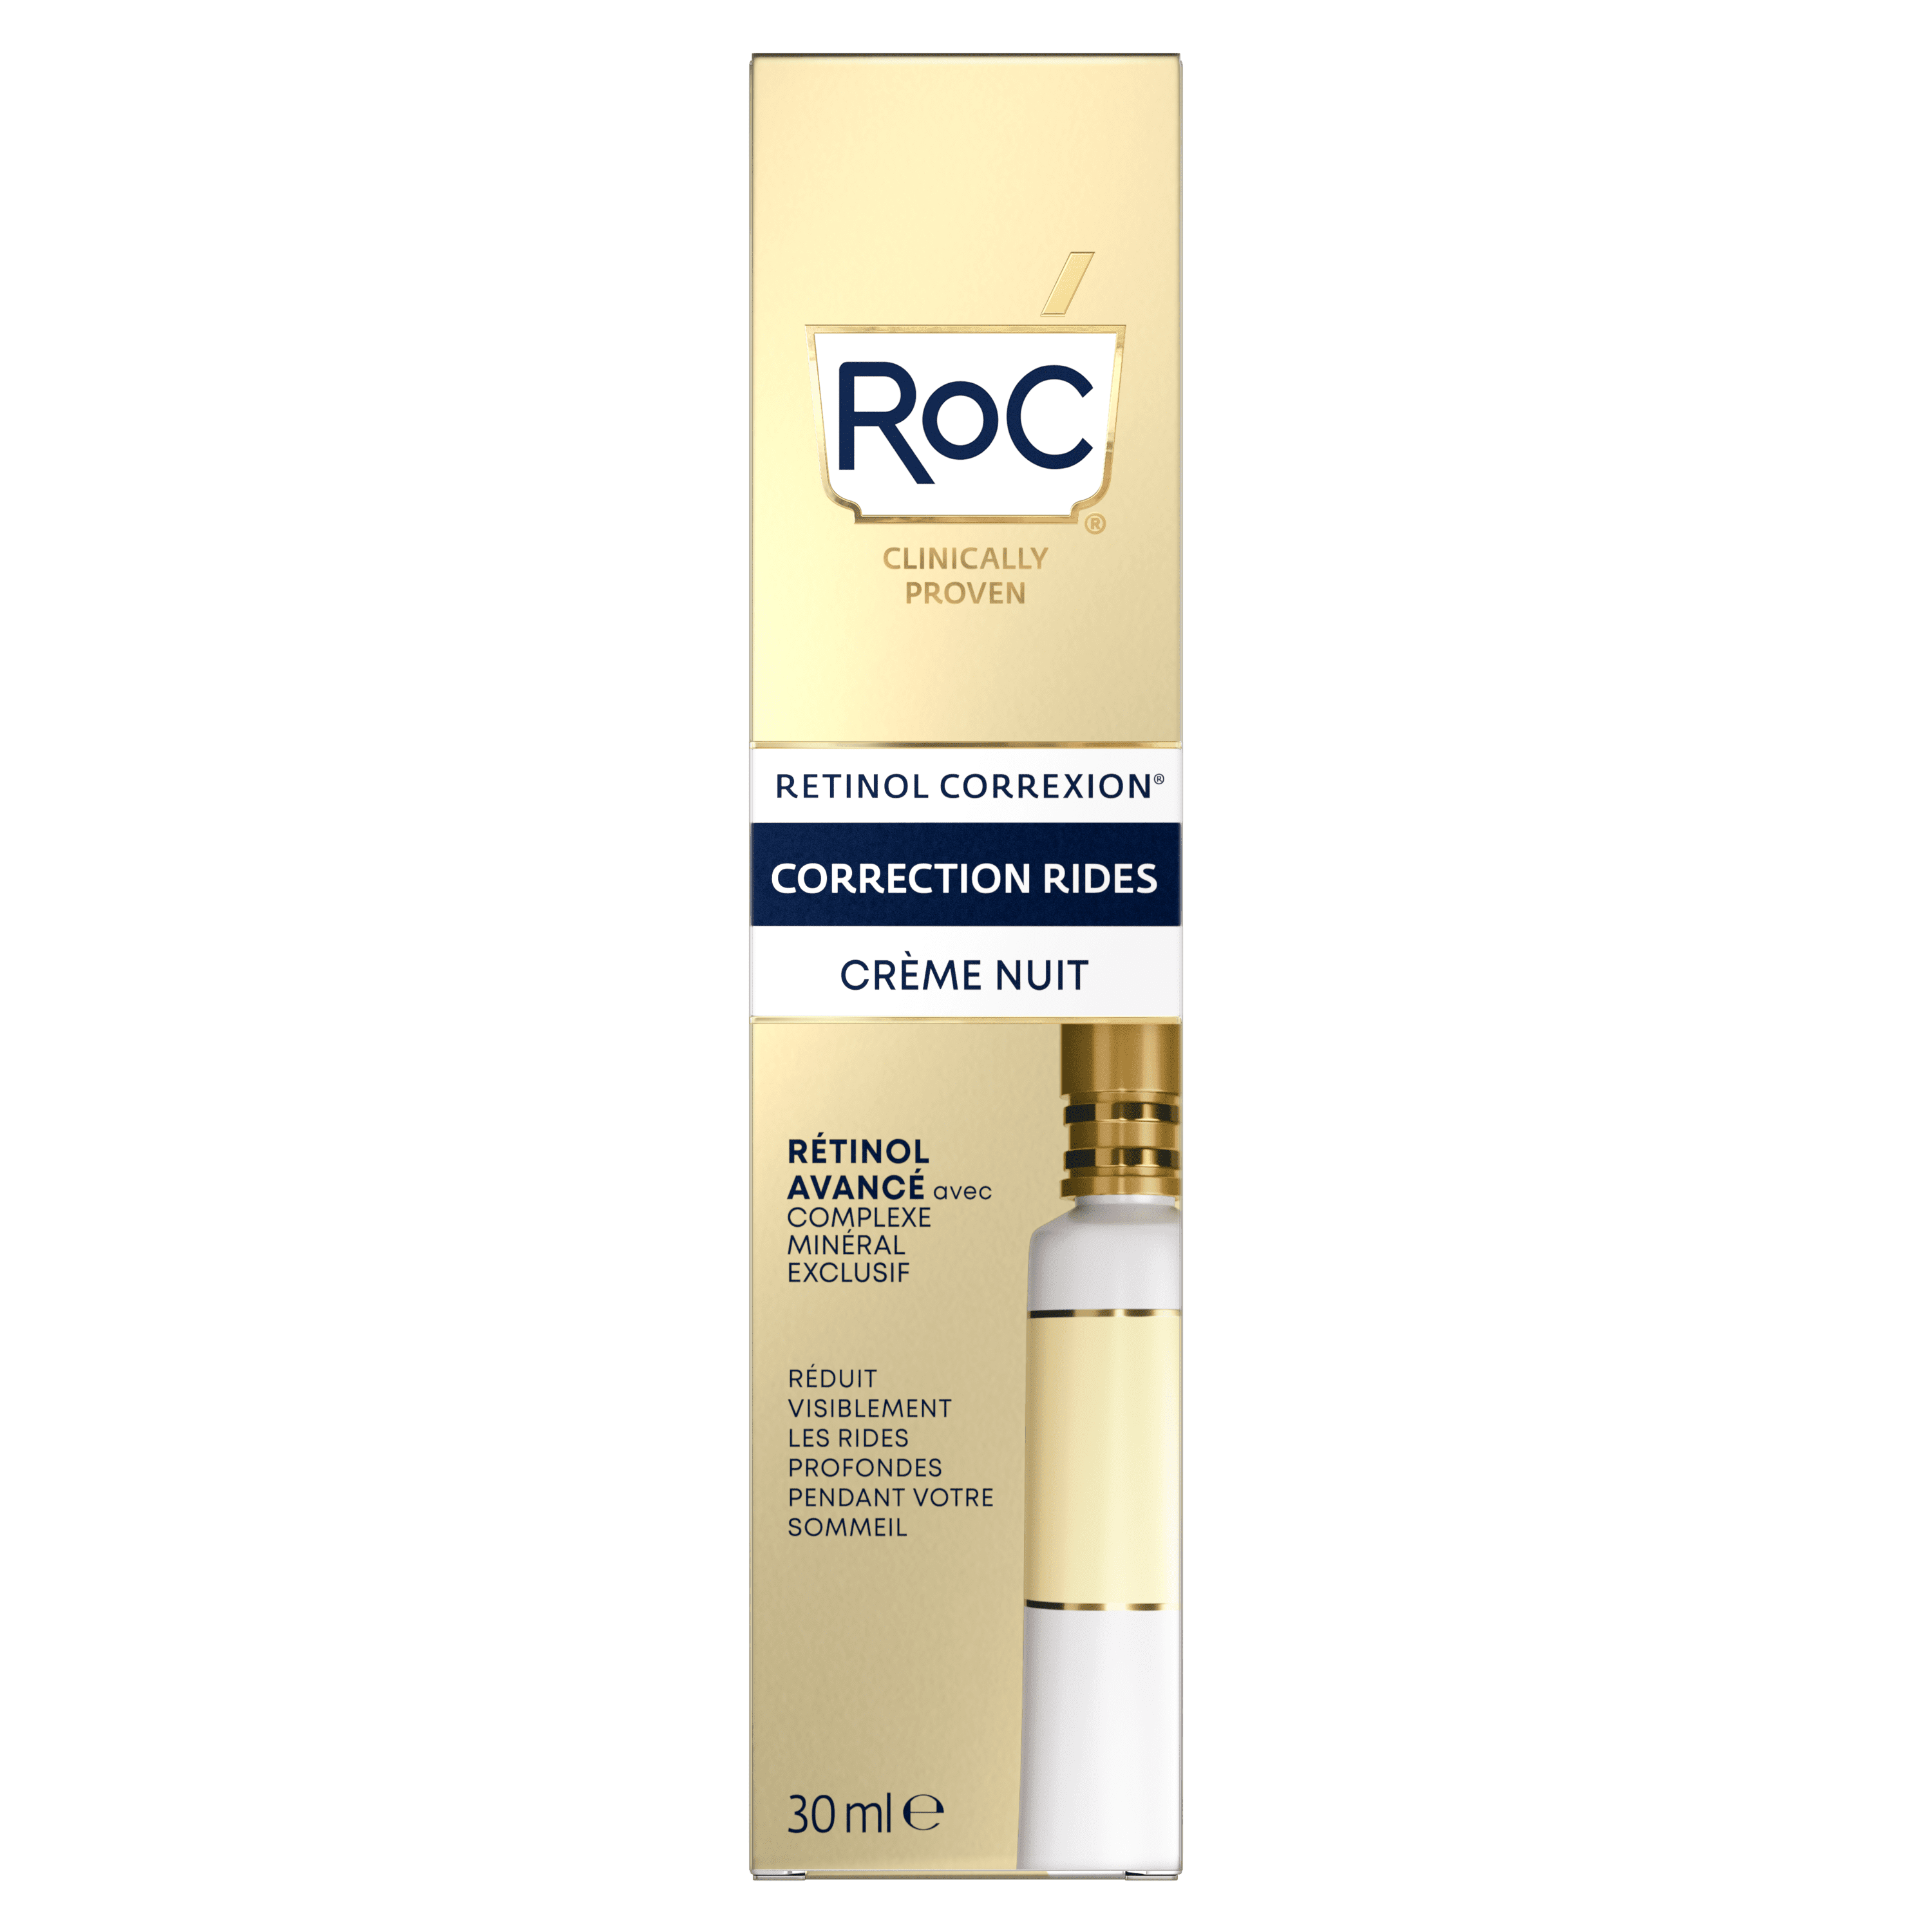 RoC Retinol Correxion Wrinkle Correct Night Cream